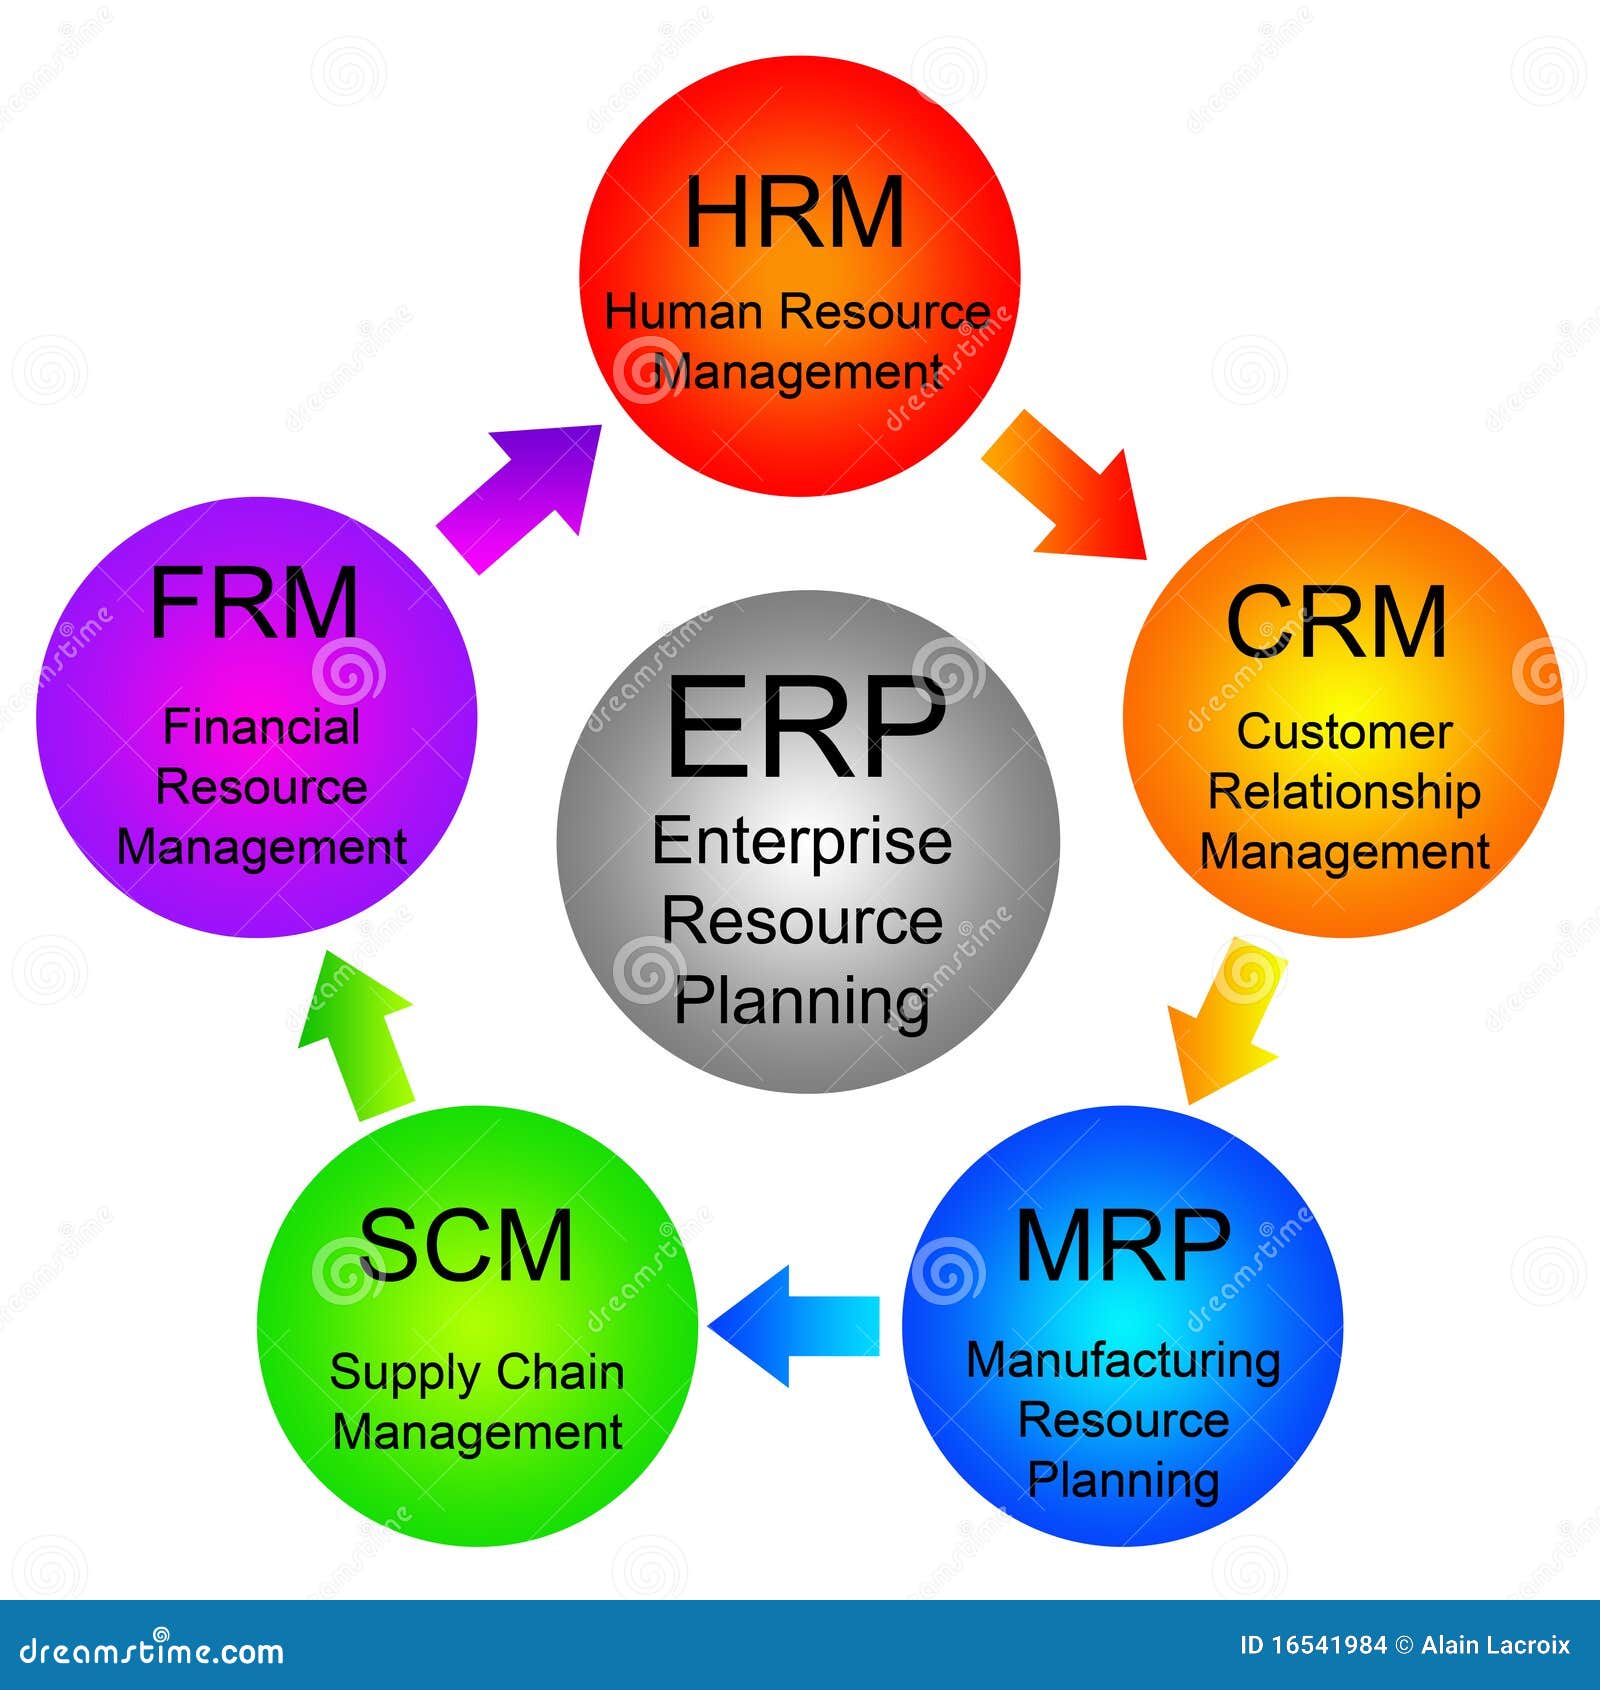 enterprise-resource-planning-stock-images-image-16541984